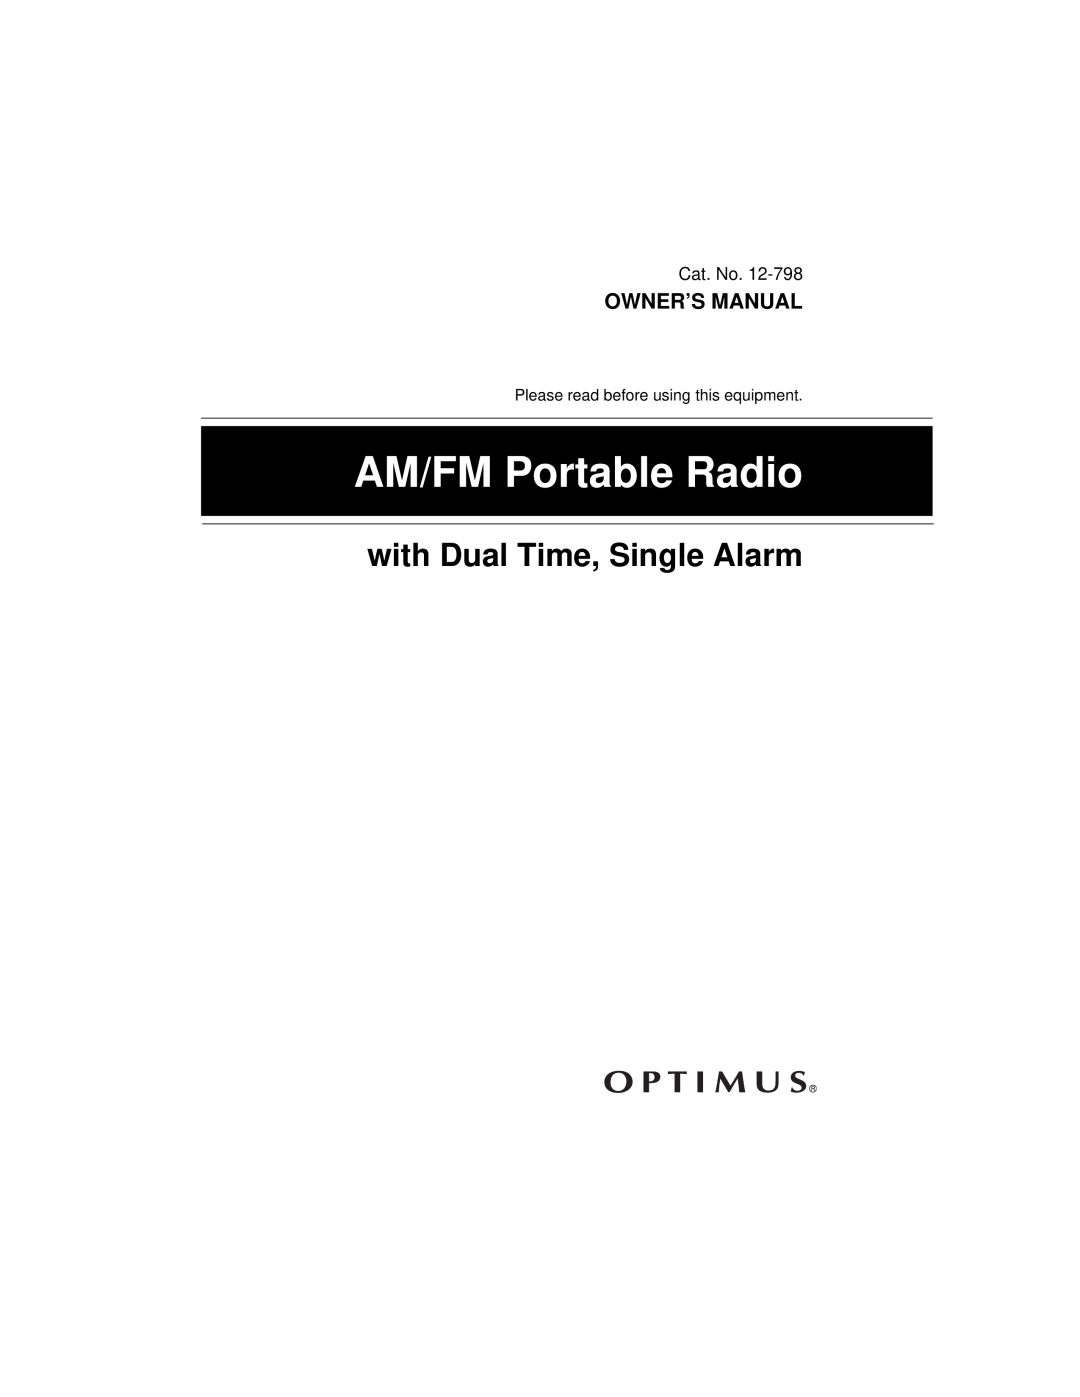 Radio Shack owner manual AM/FM Portable Radio, with Dual Time, Single Alarm 